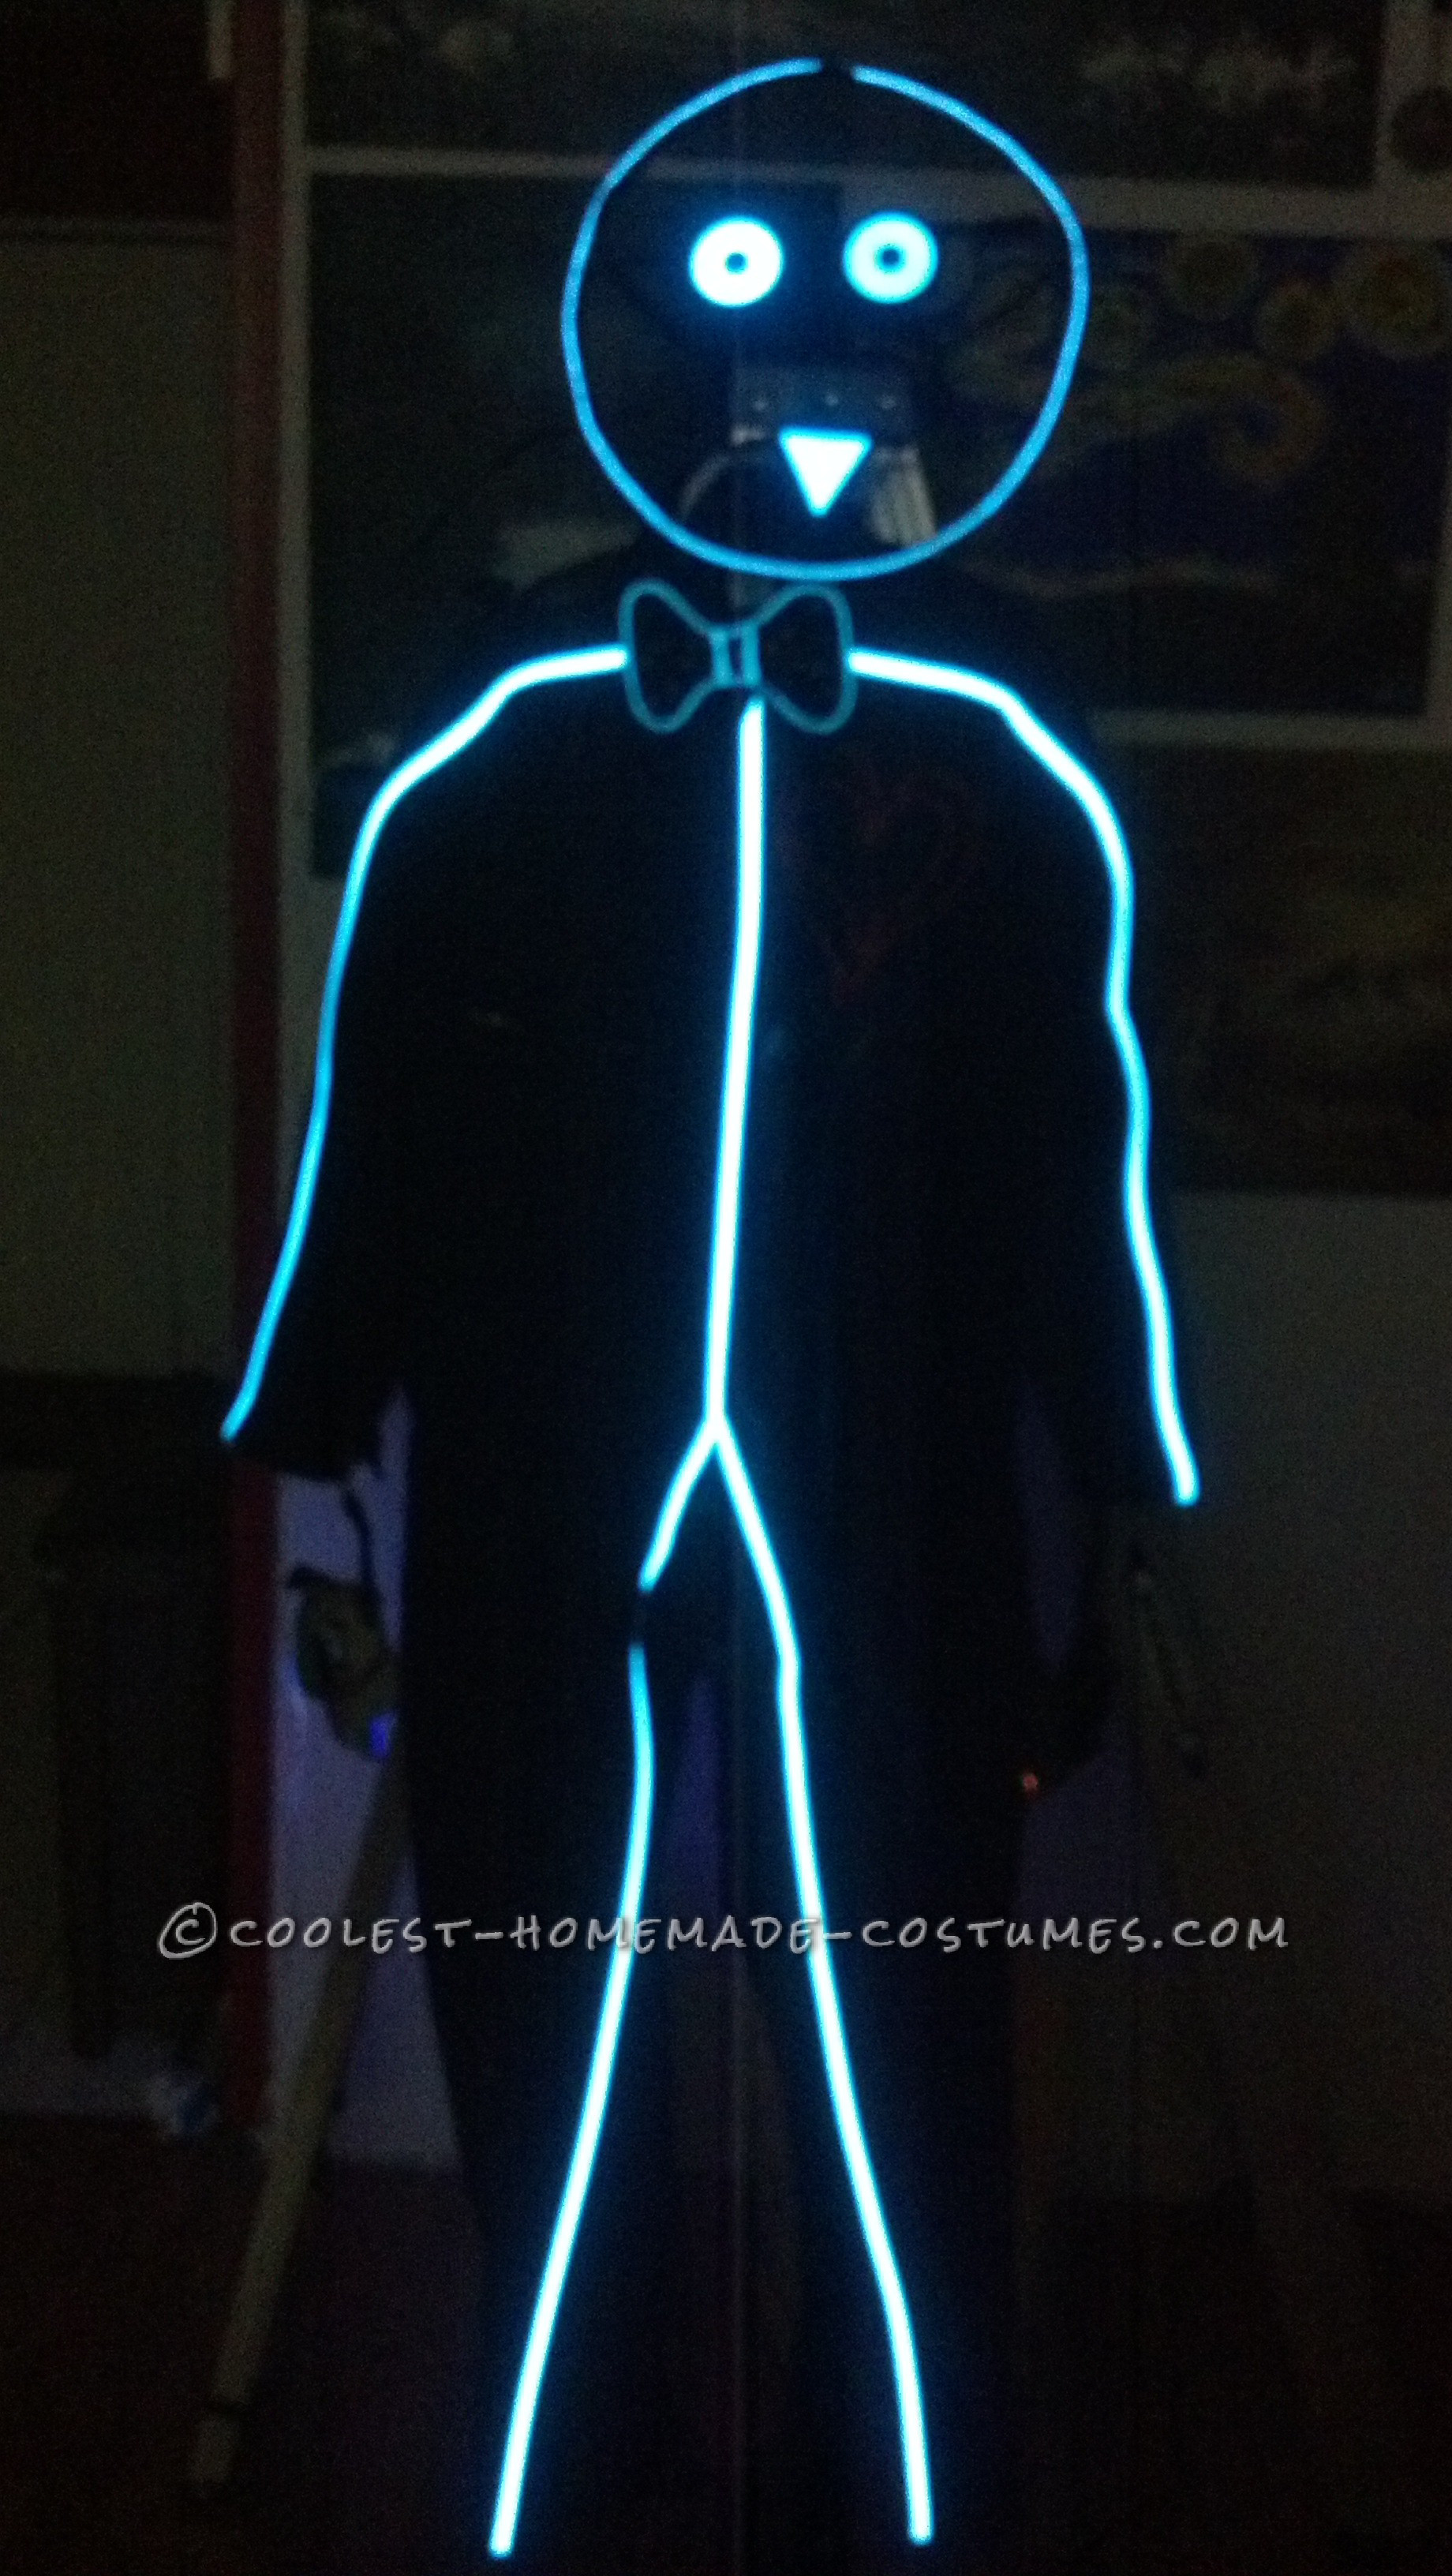 Best ideas about Led Stick Figure Costume DIY
. Save or Pin High Power EL Stick Figure Costume Now.